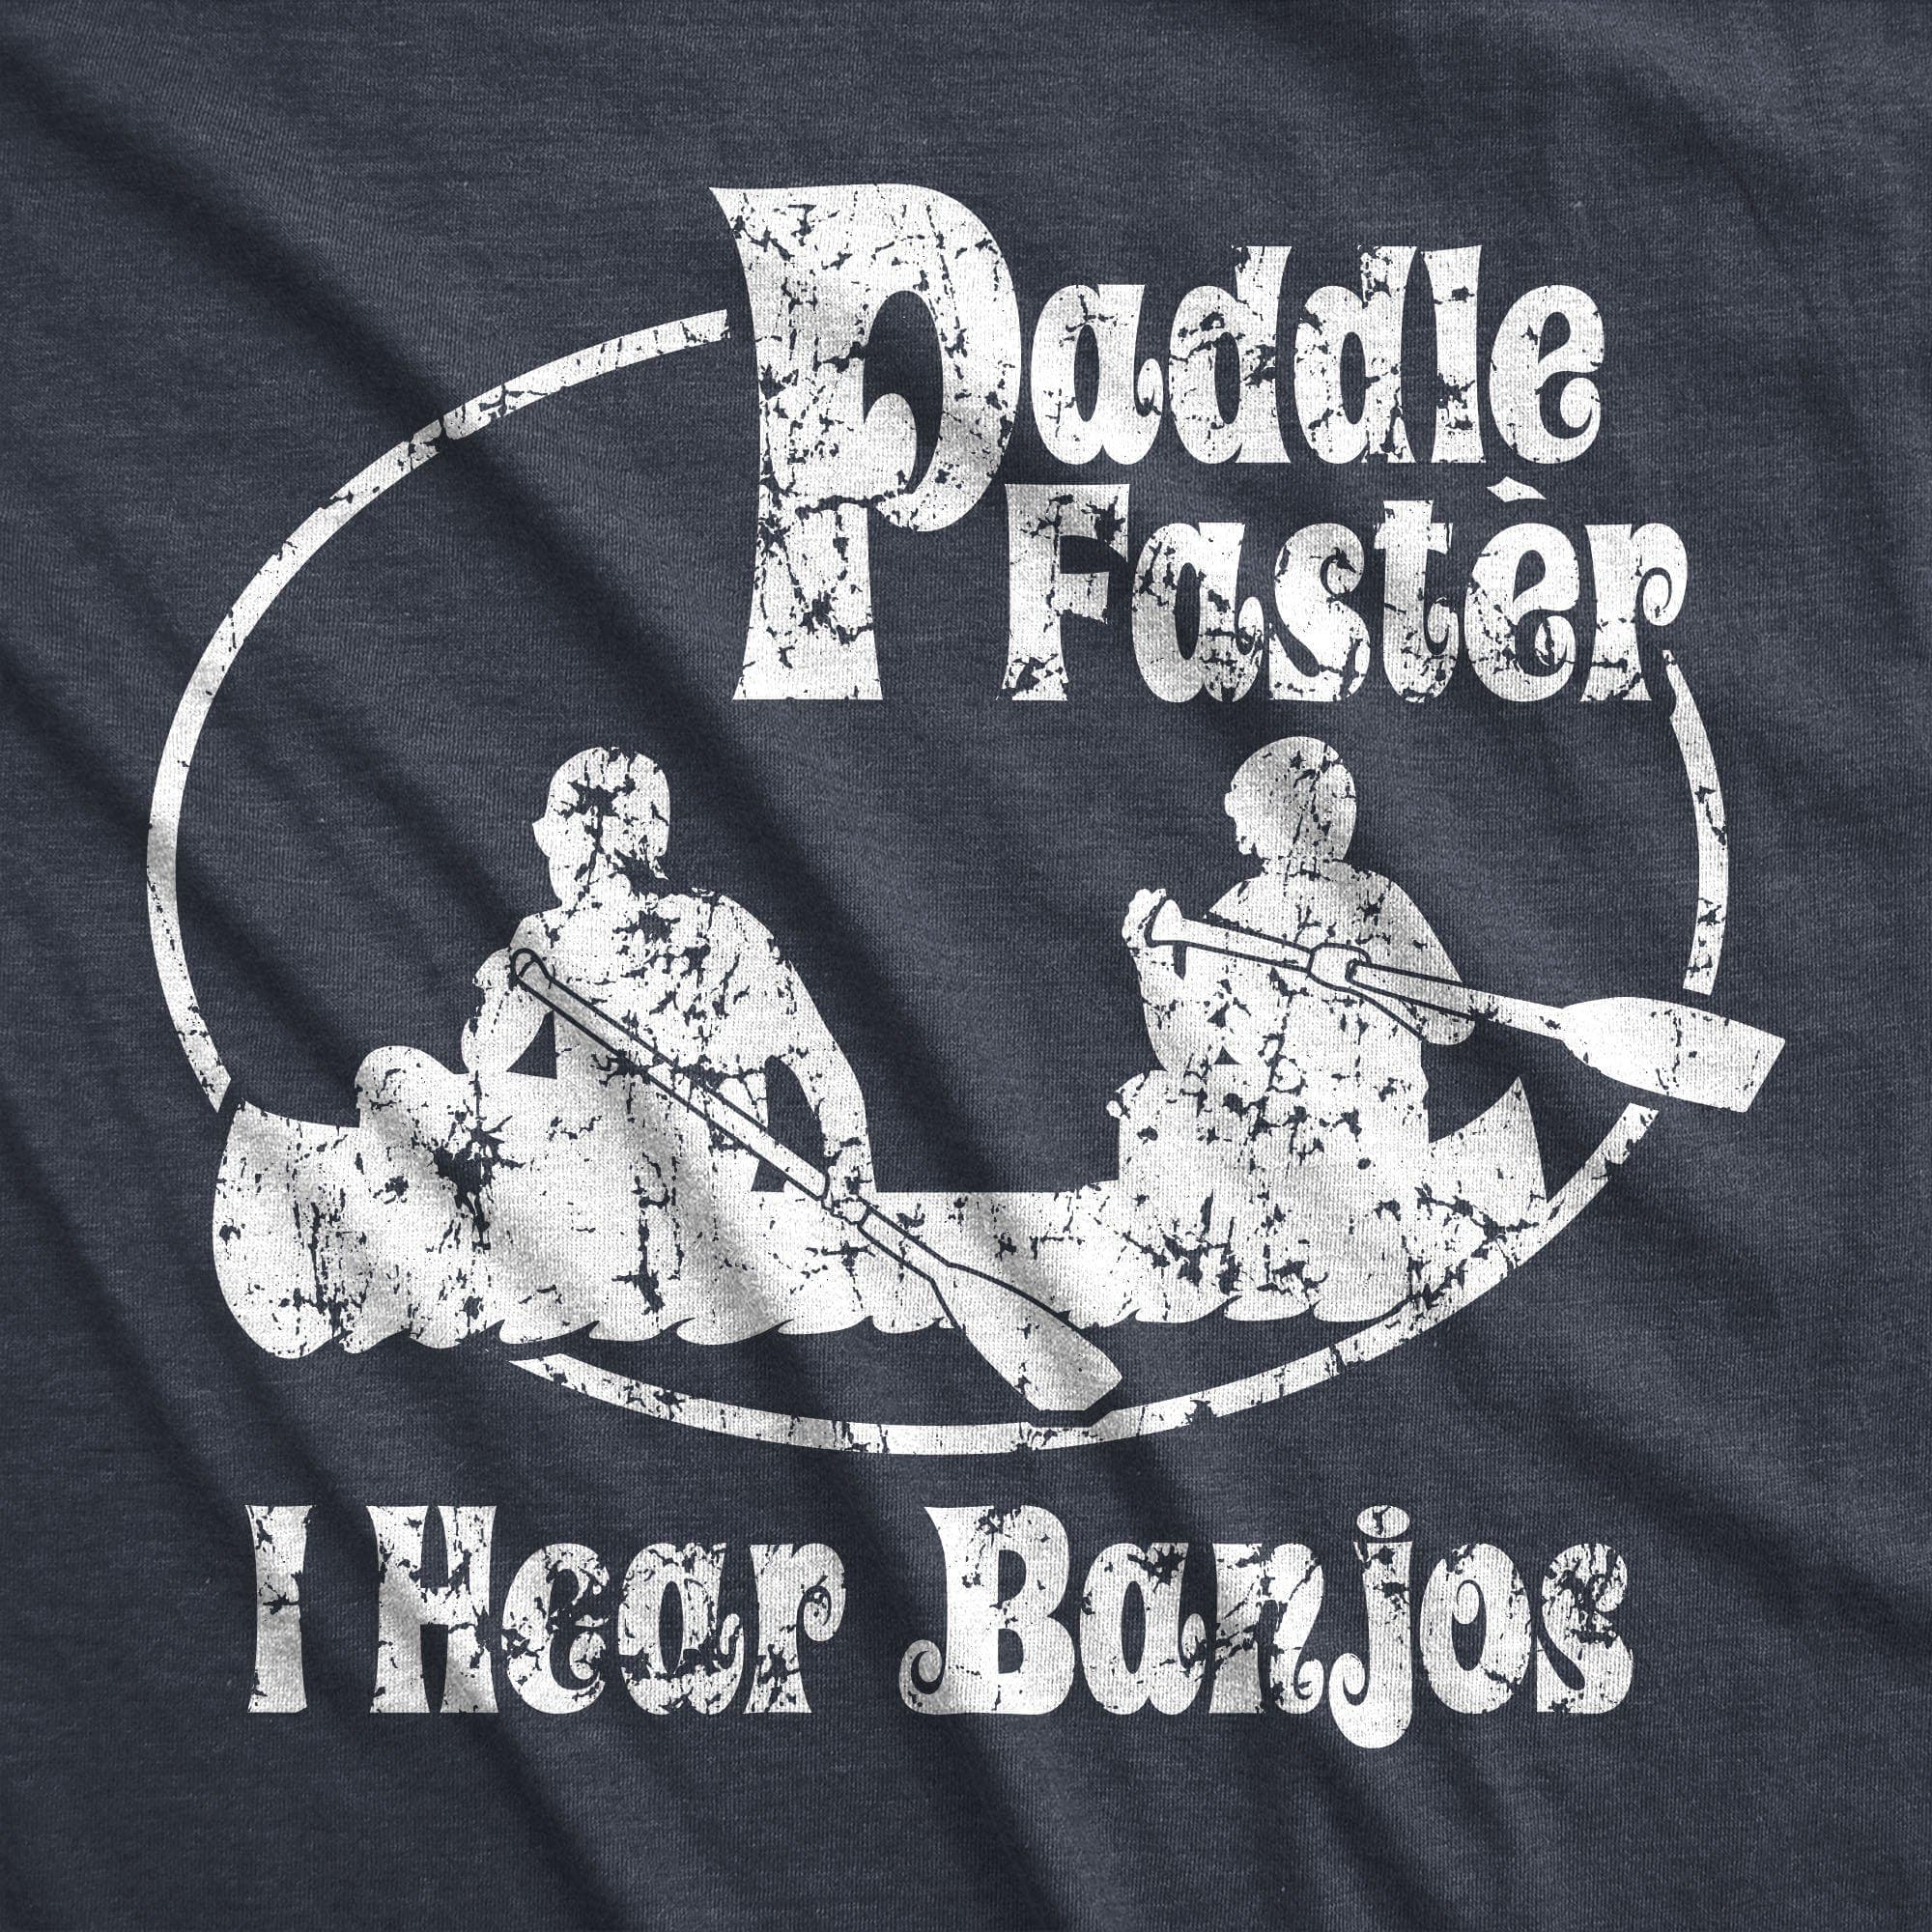 Paddle Faster Men's Tshirt  -  Crazy Dog T-Shirts